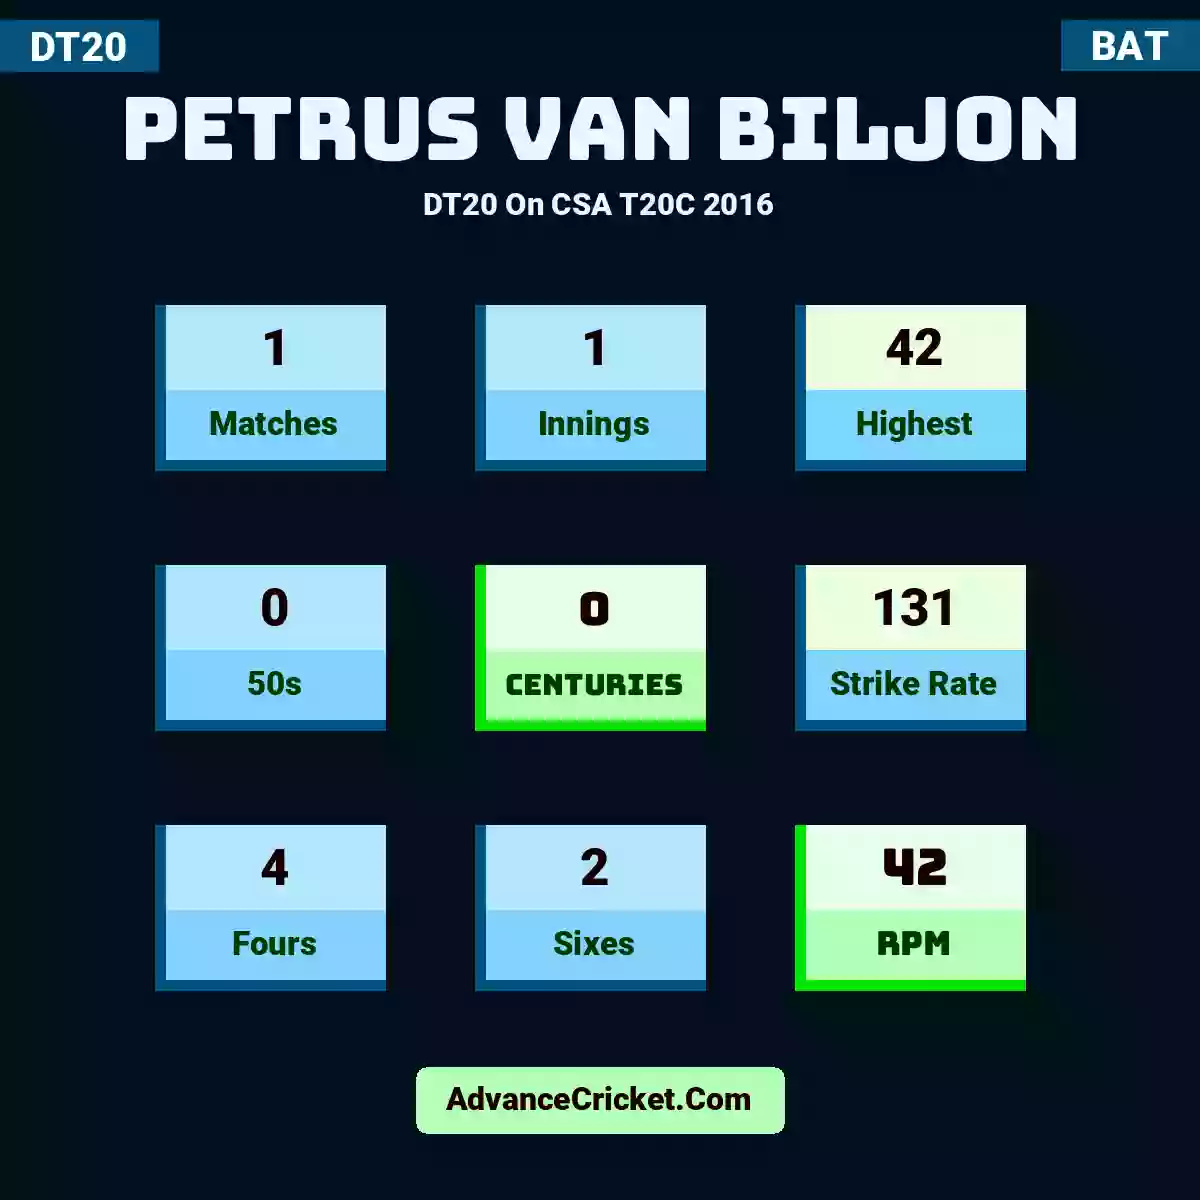 Petrus van Biljon DT20  On CSA T20C 2016, Petrus van Biljon played 1 matches, scored 42 runs as highest, 0 half-centuries, and 0 centuries, with a strike rate of 131. P.Biljon hit 4 fours and 2 sixes, with an RPM of 42.